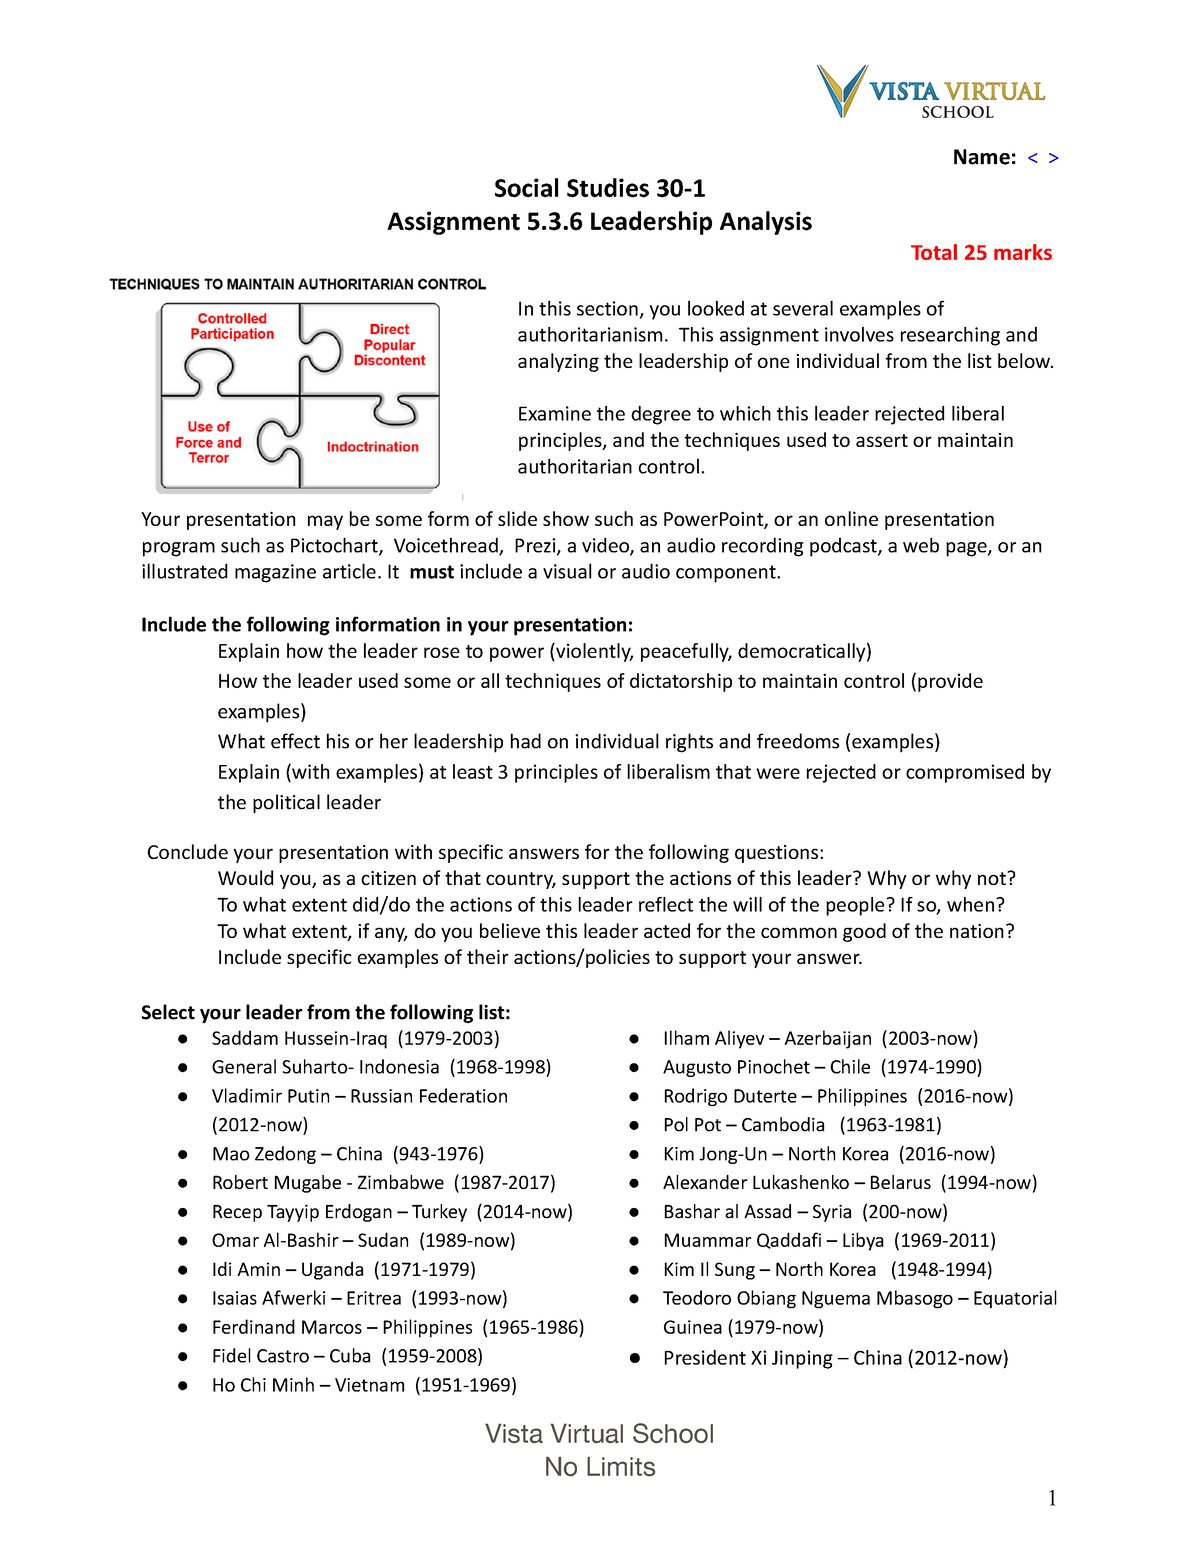 5.3.6 leadership analysis assignment